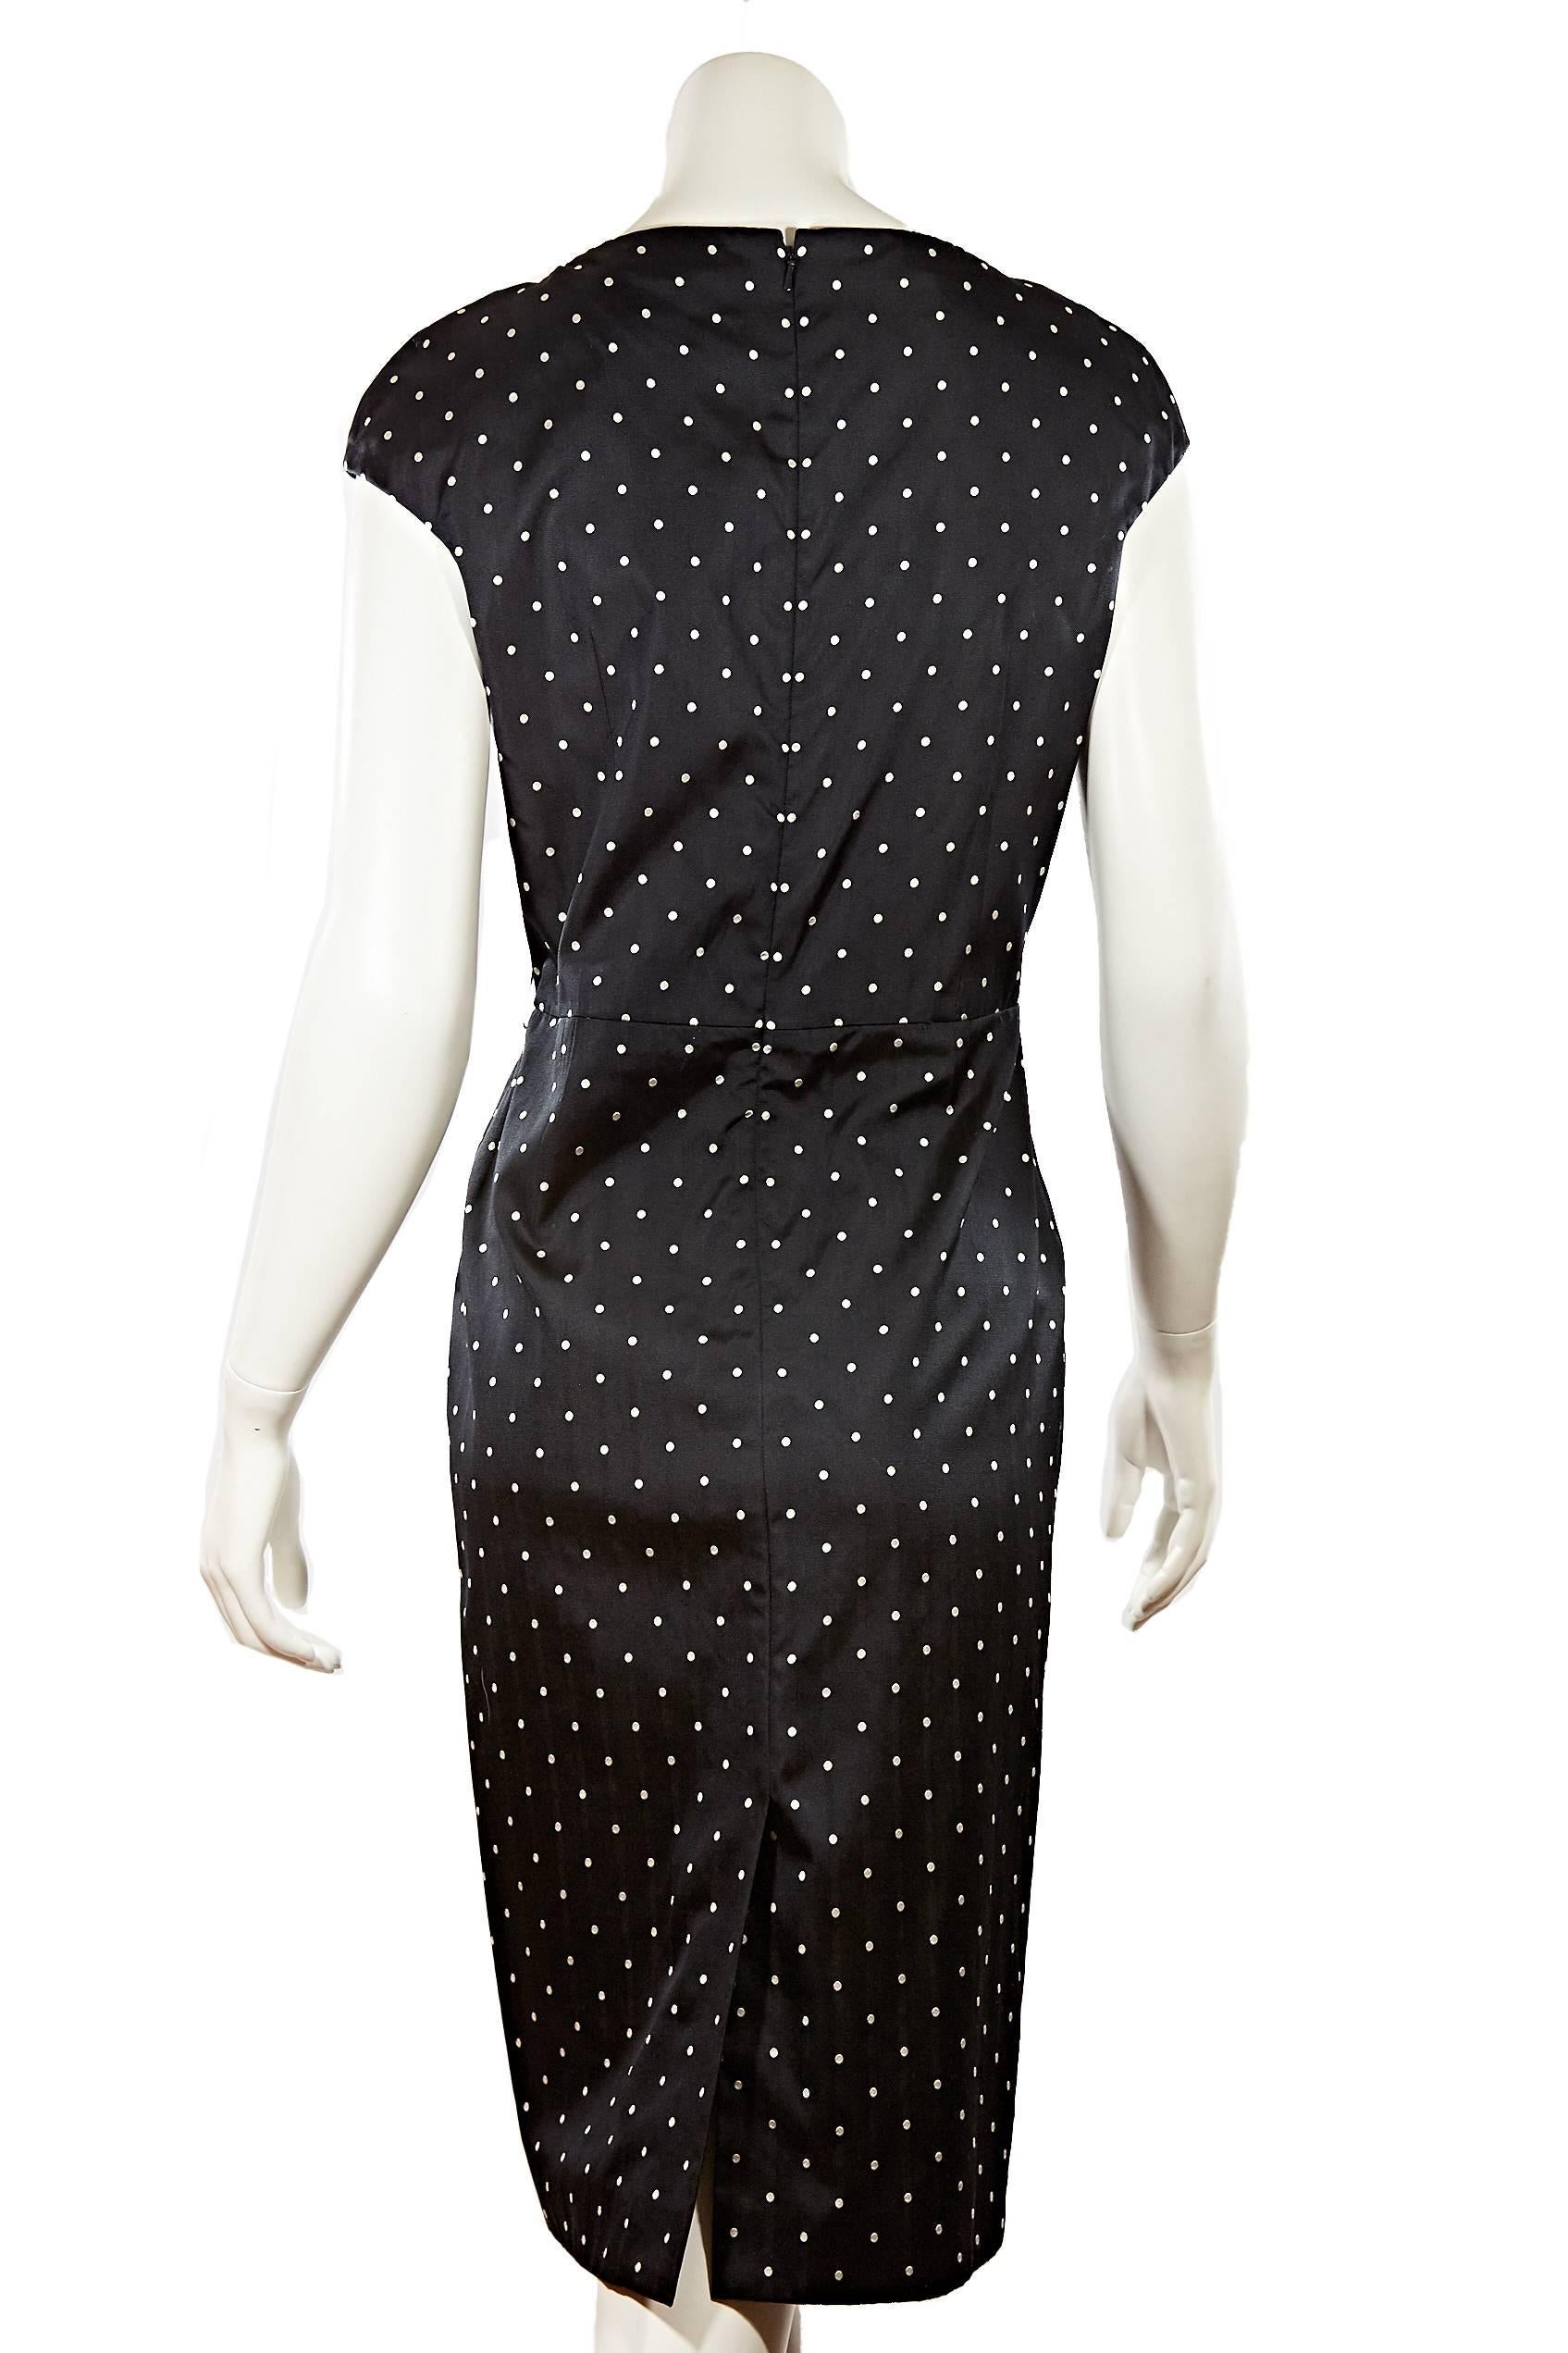 Women's Christian Dior Black Polka Dot Cap Sleeve Sheath Dress